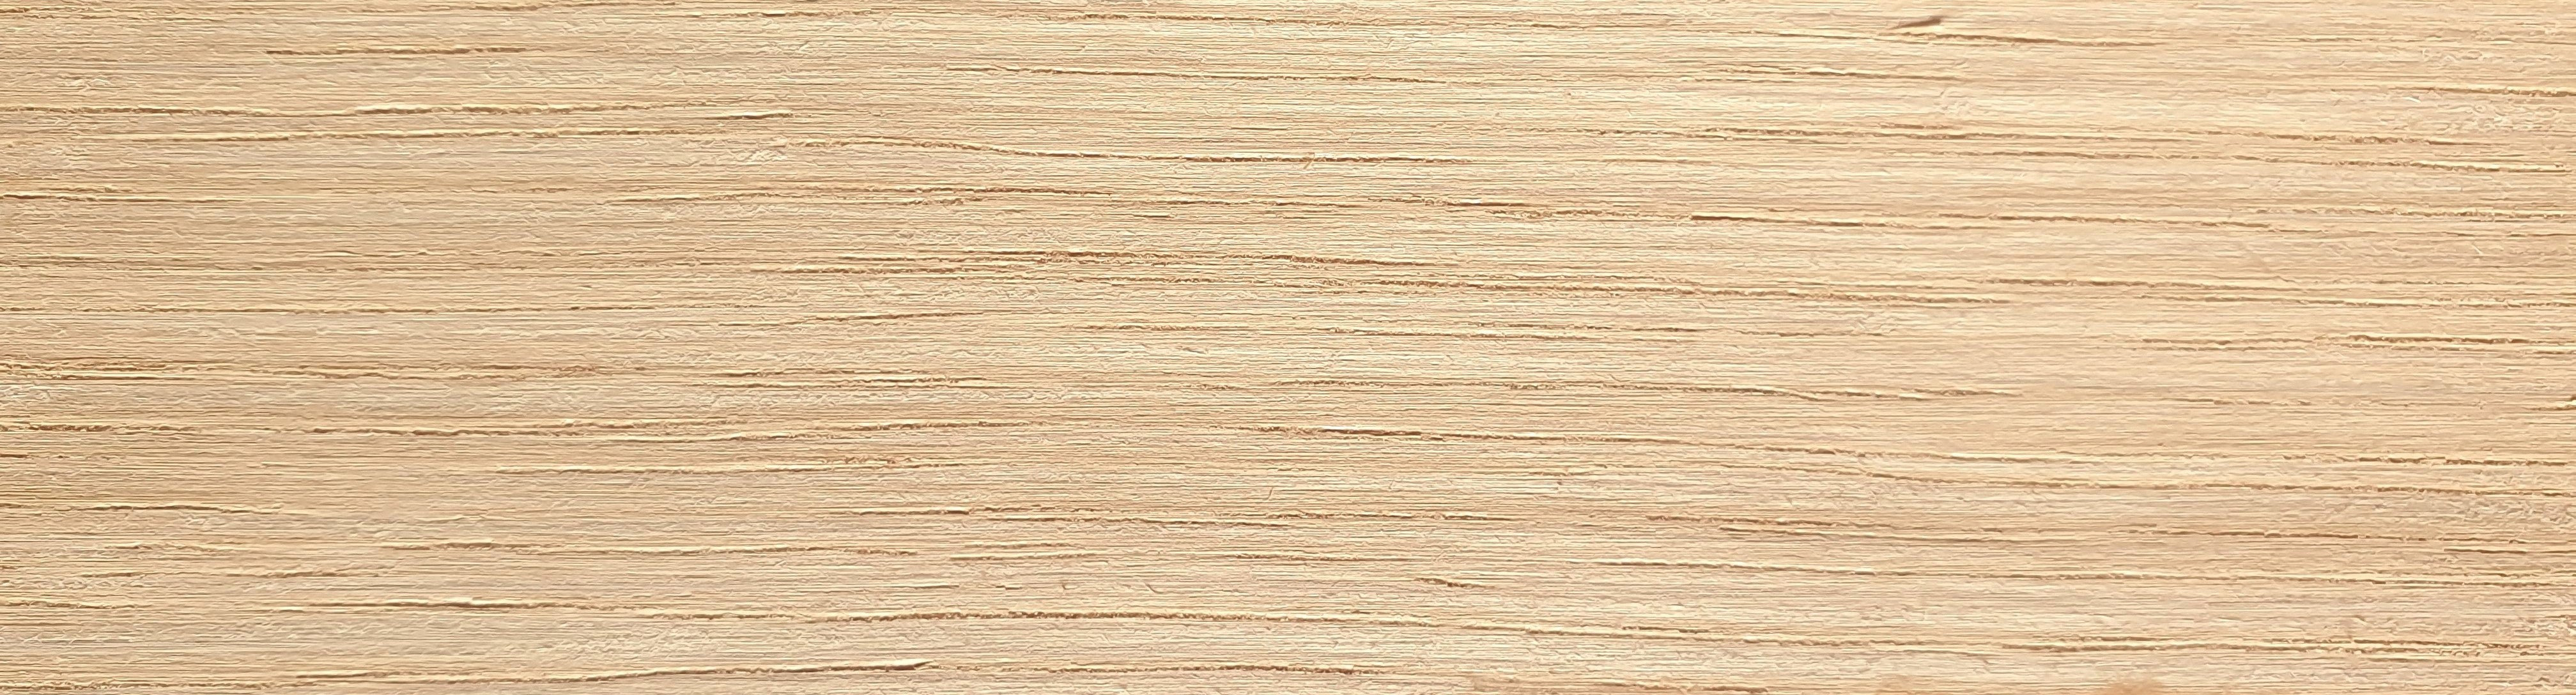 American White Oak Unglued Edging / Lipping 42mm x 2mm Thick Oak Wood Edging x 50 Metres